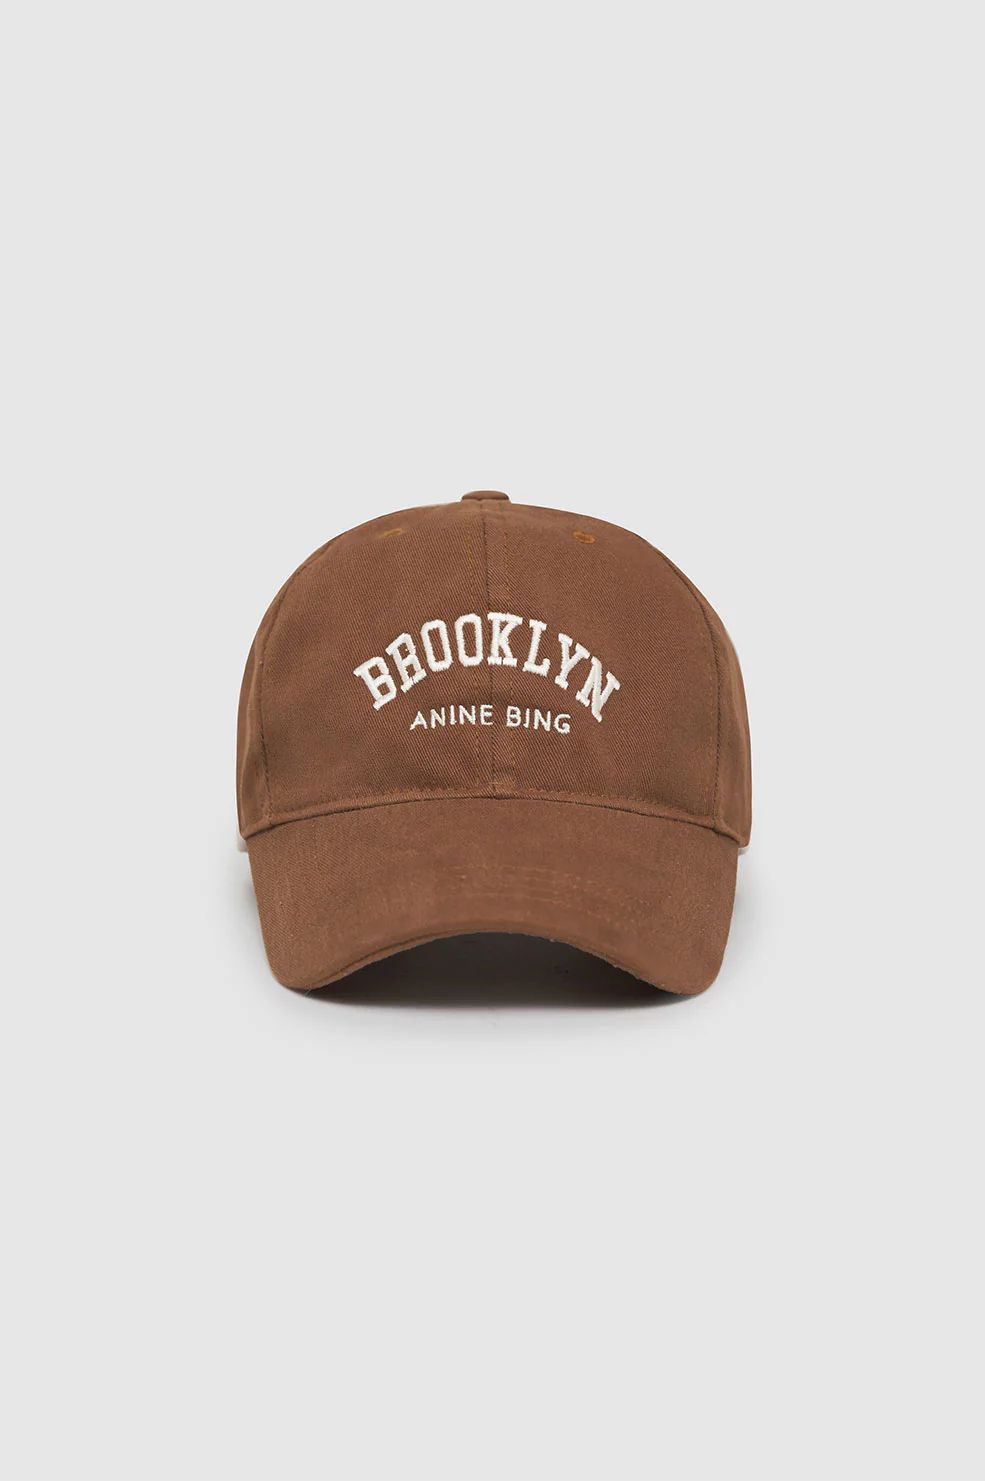 Jeremy Baseball Cap University Brooklyn | Anine Bing